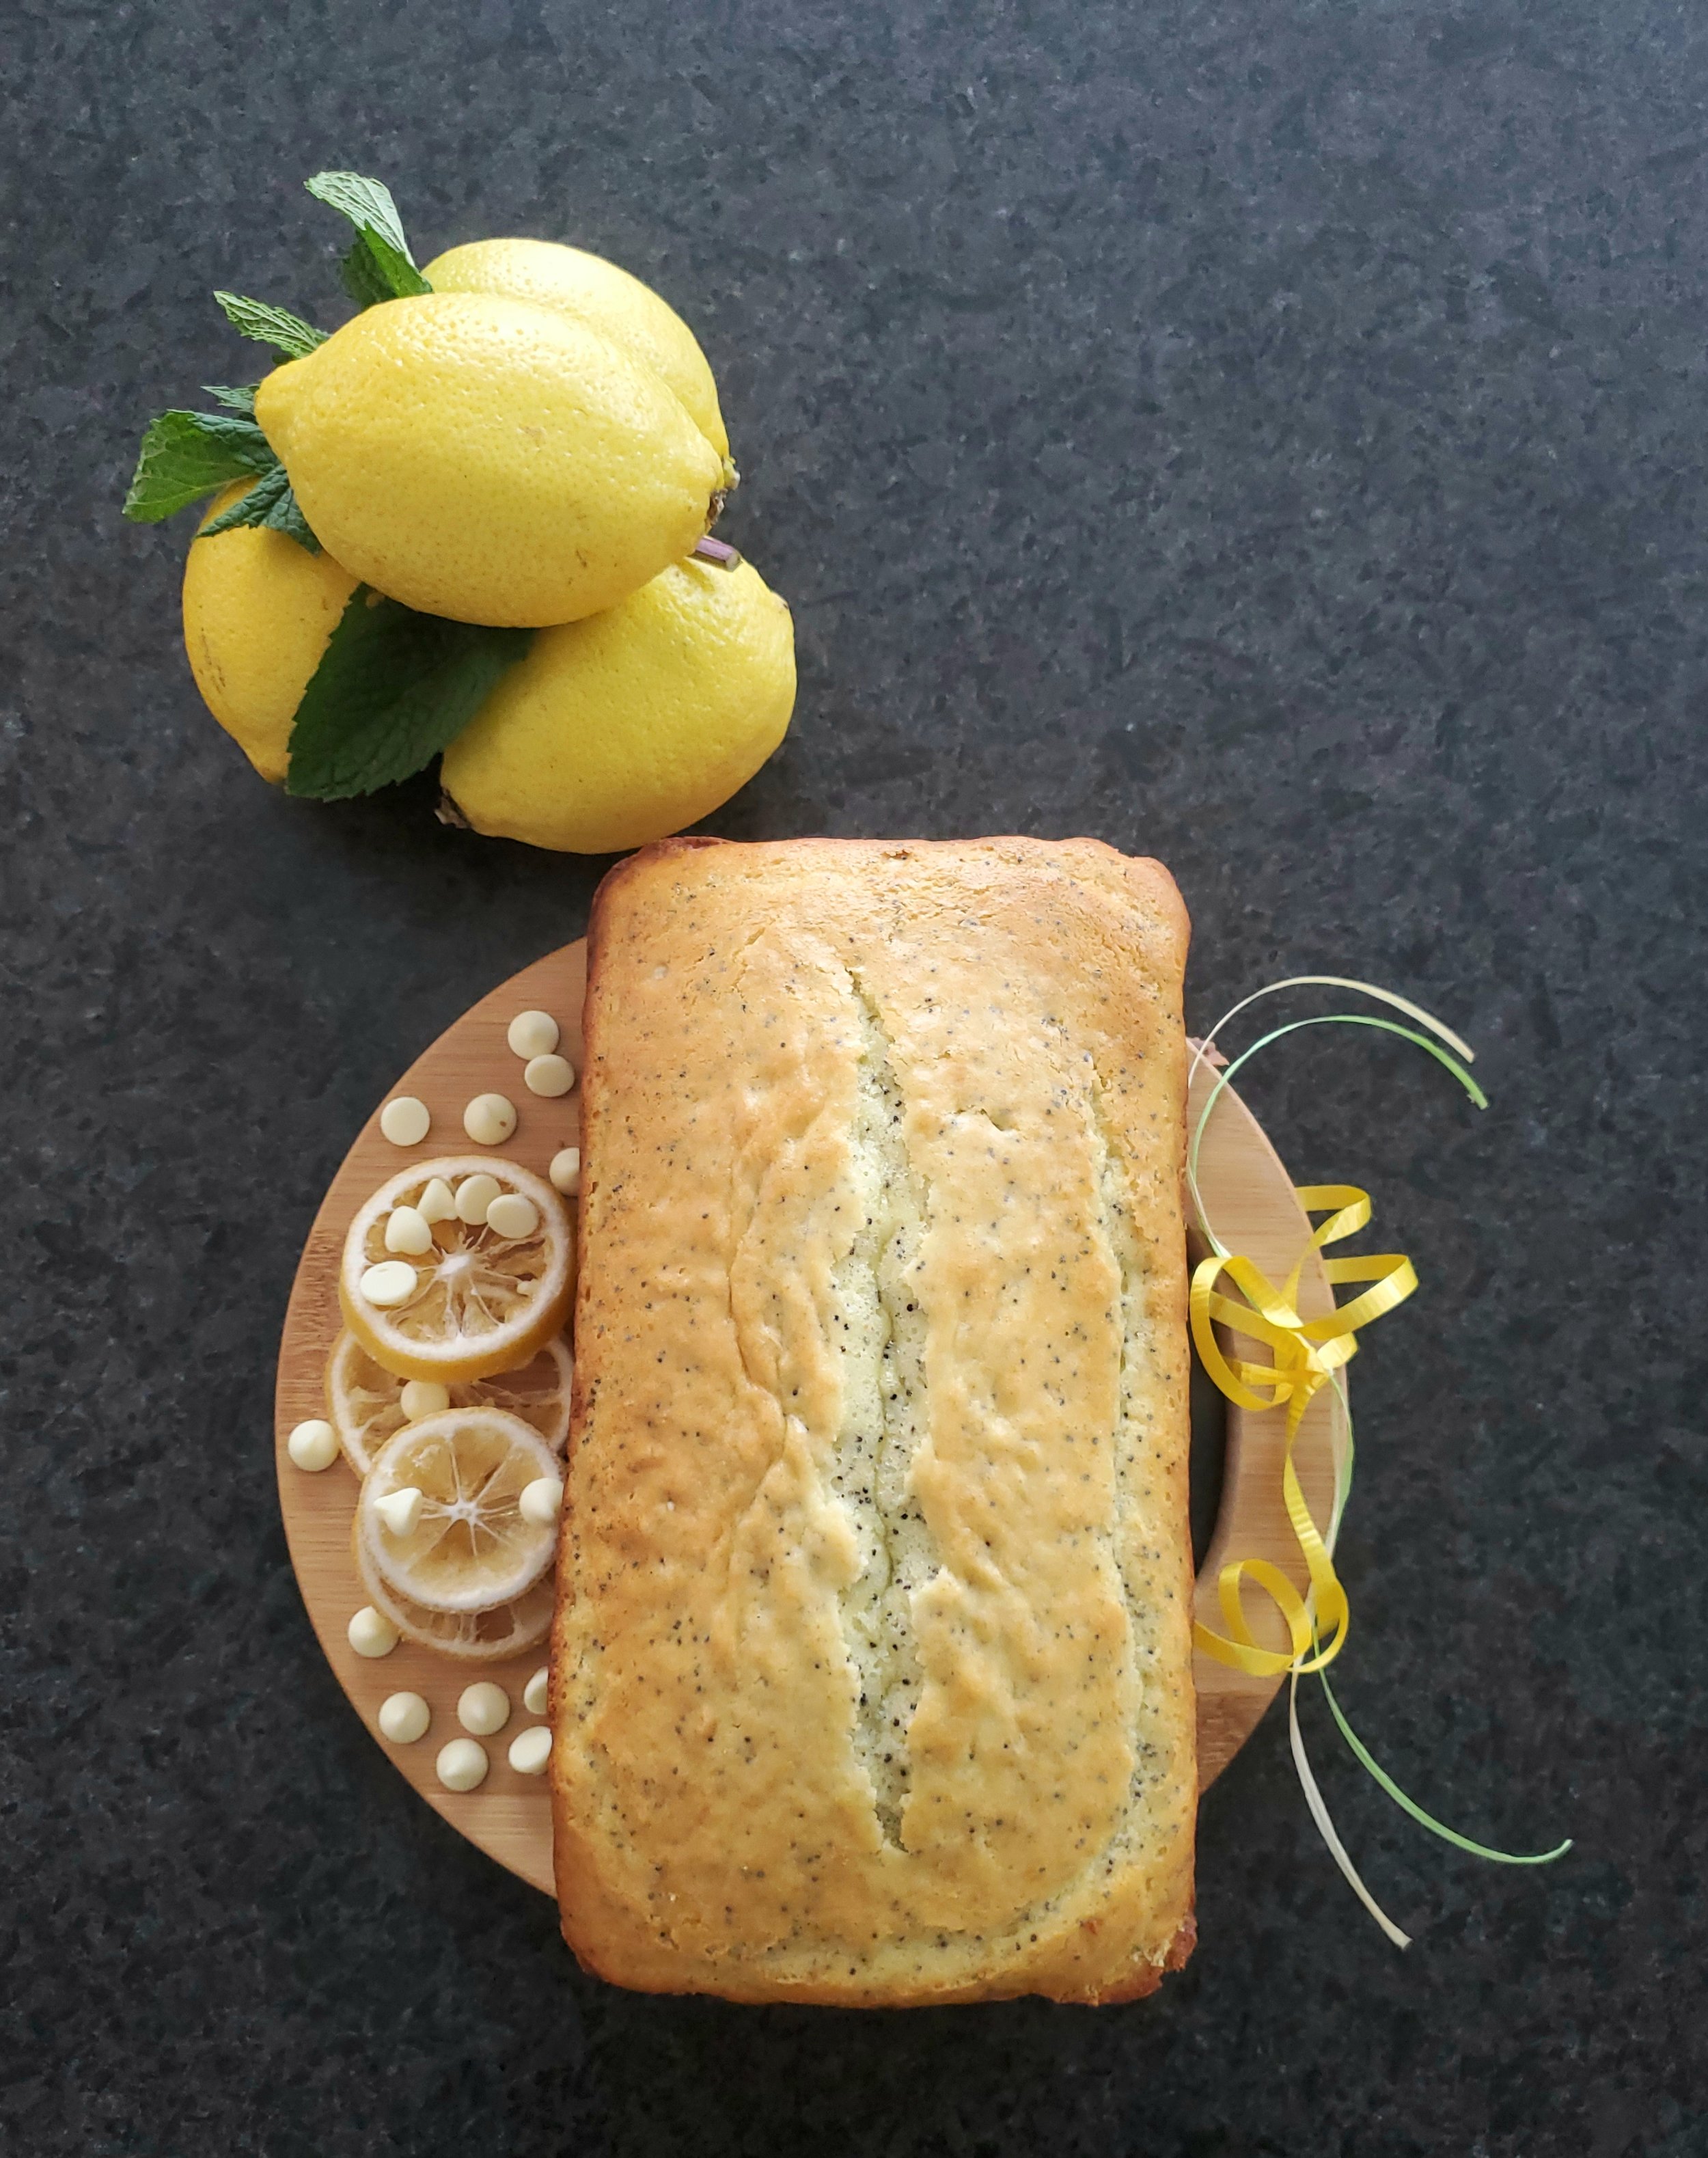 Mrs. J's Lemon Poppy Seed Bread